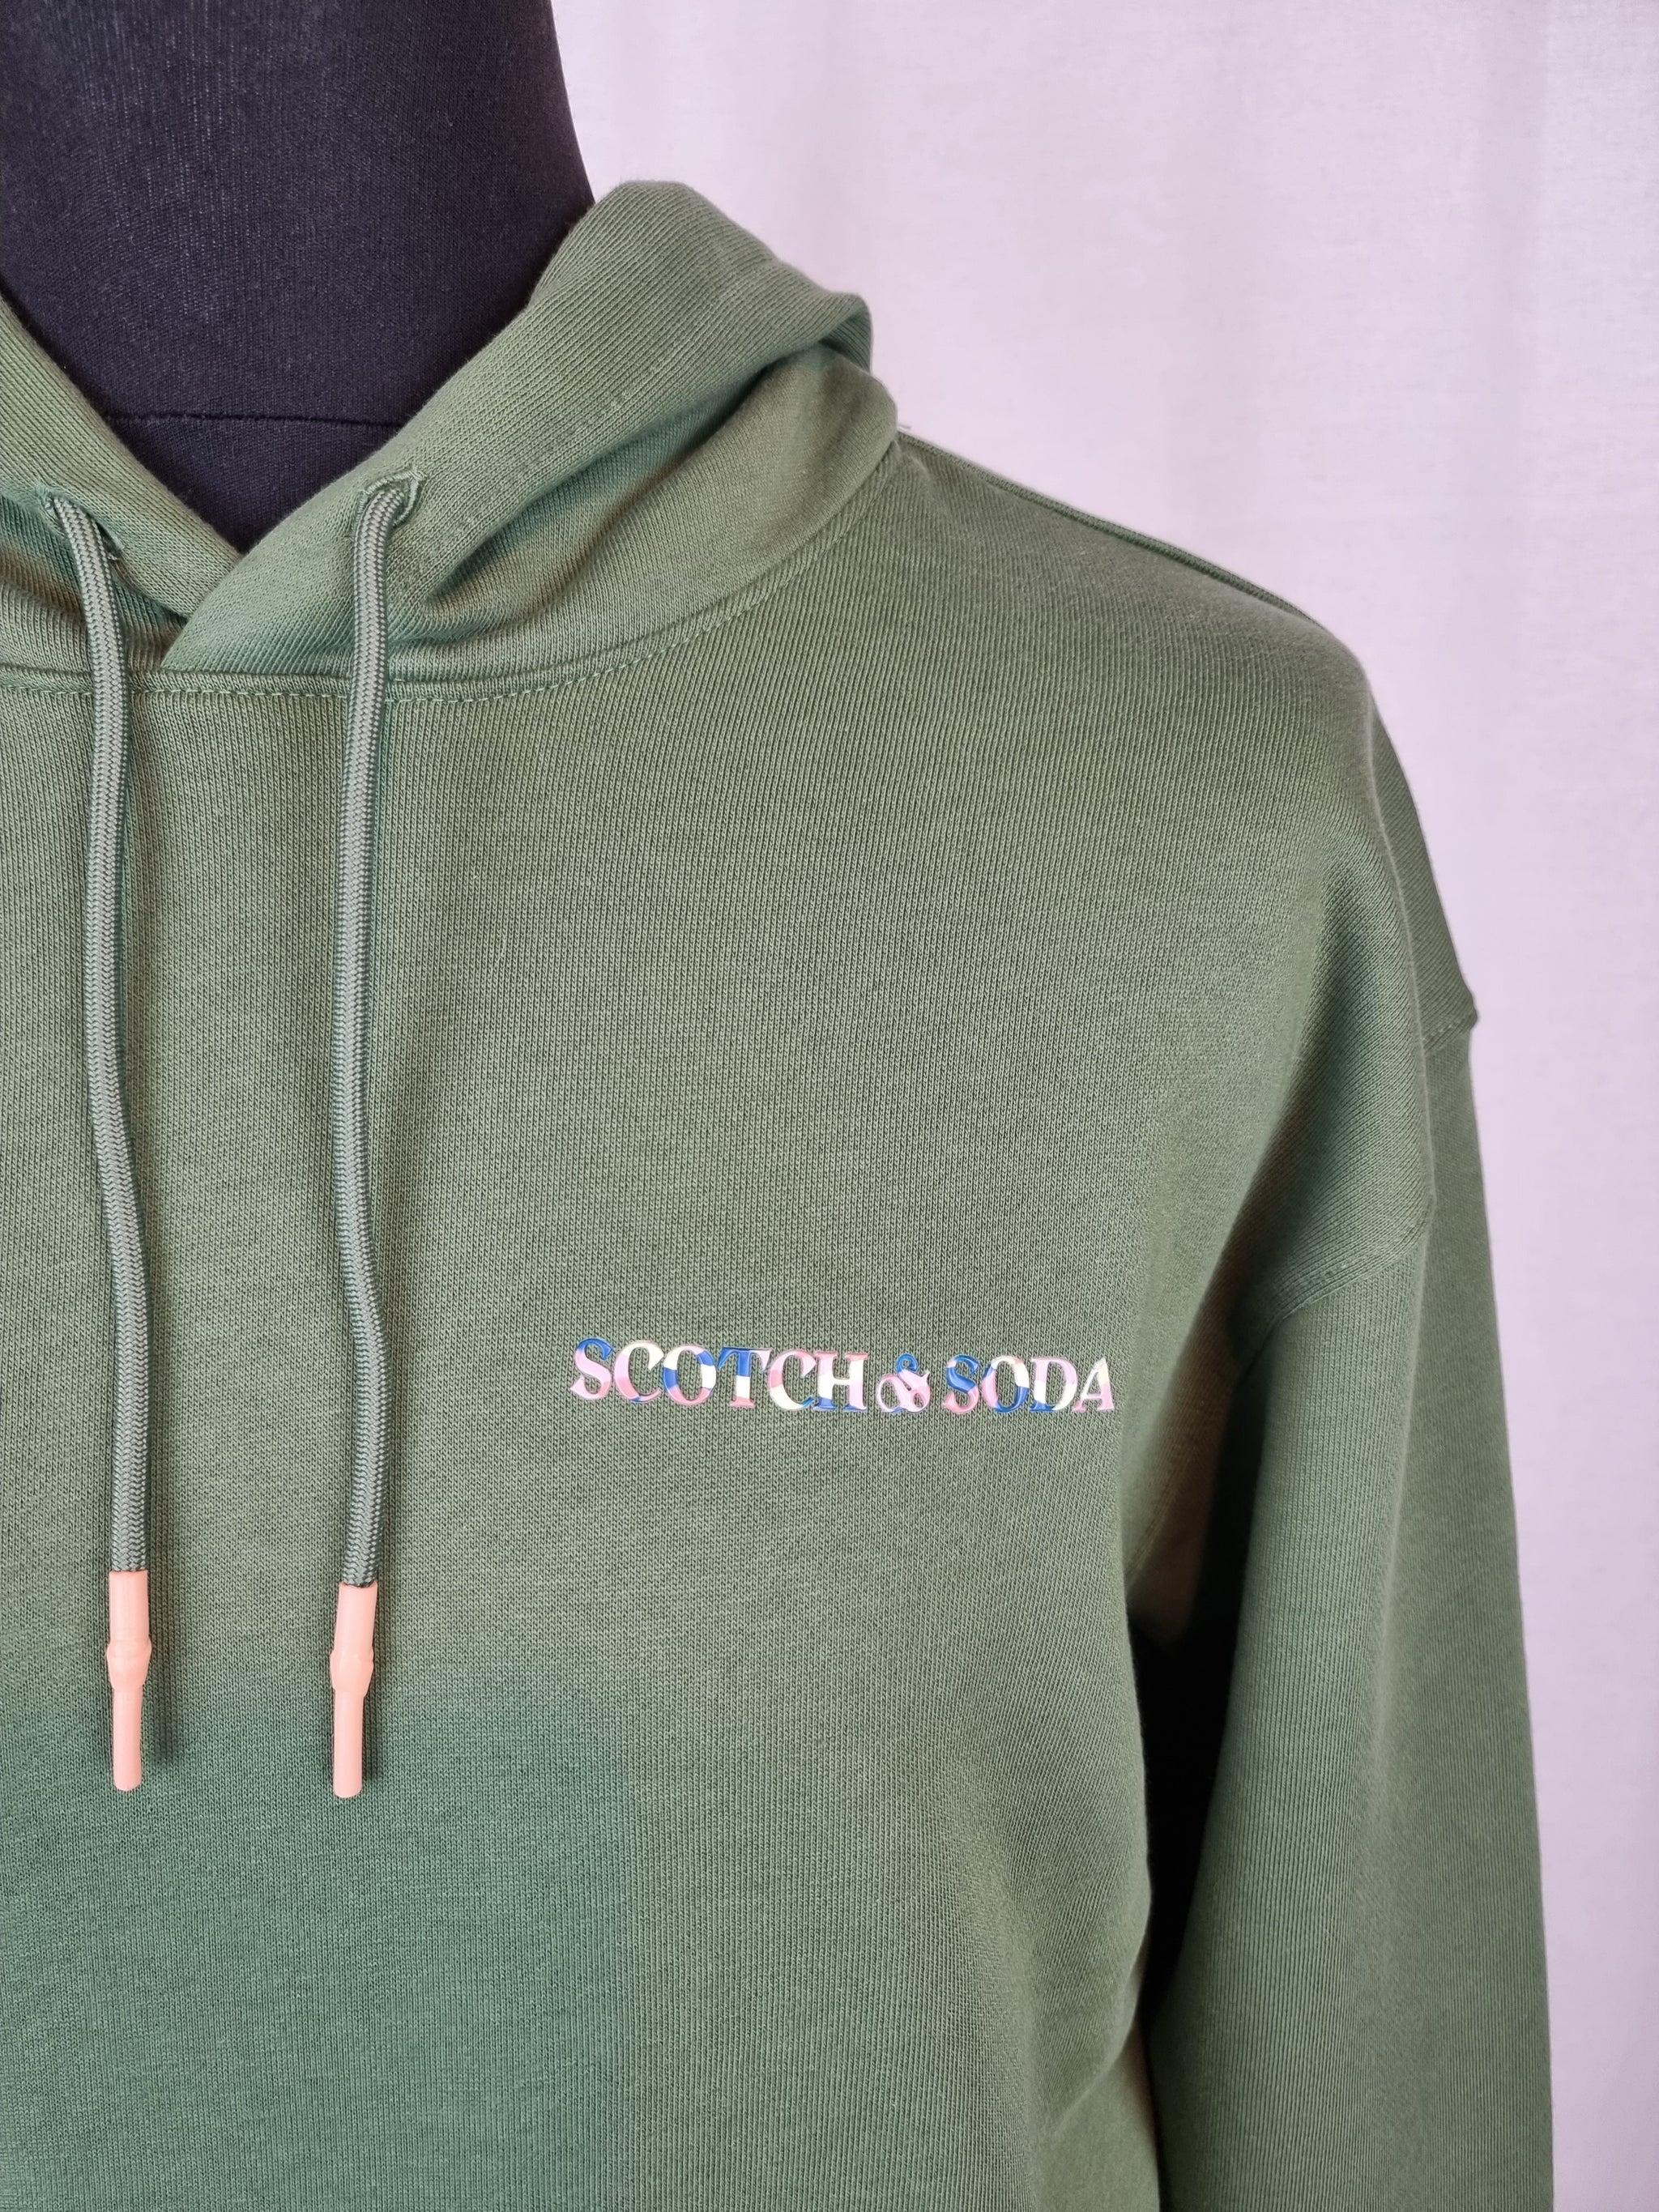 Scotch and Soda Unisex organic cotton hooded sweatshirt